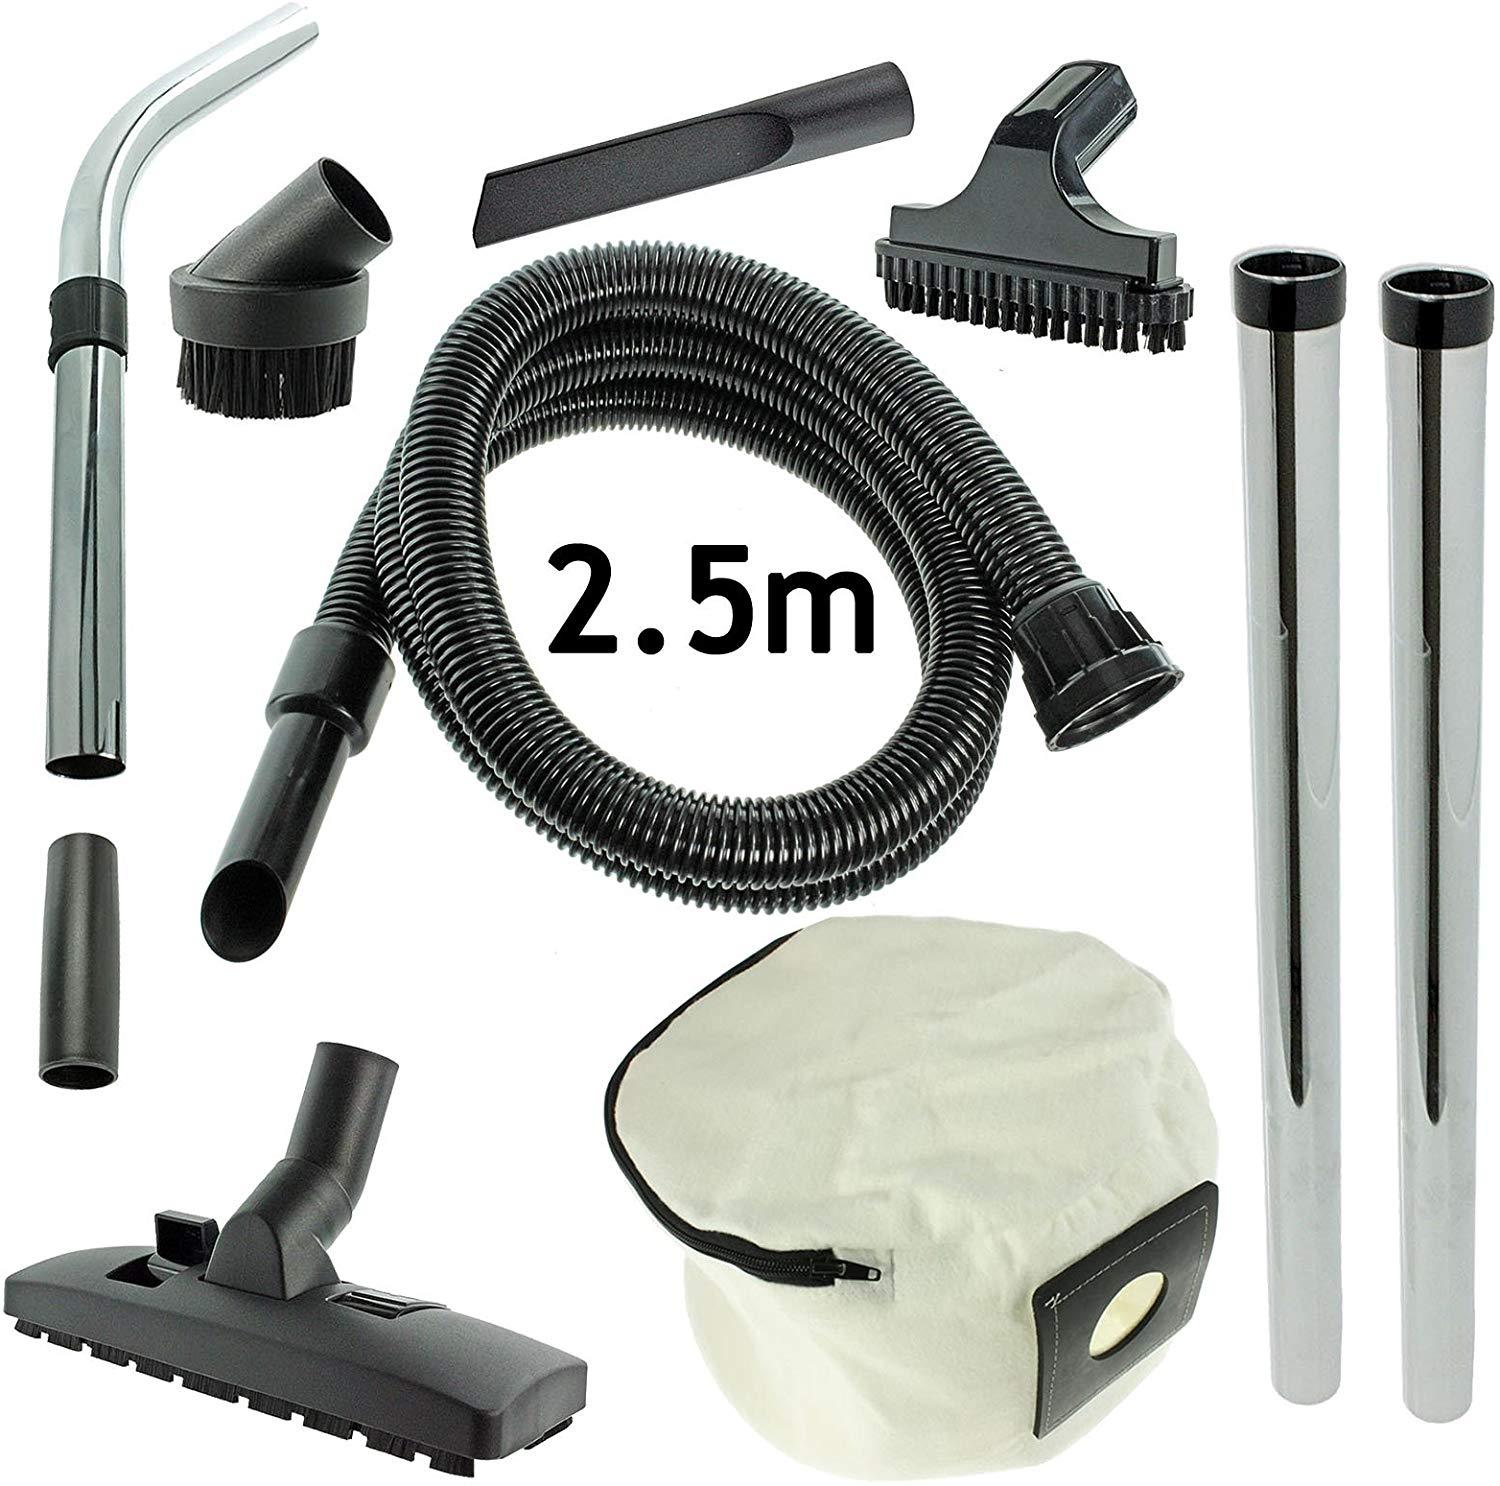 SPARES2GO Hose & Tool Kit Plus Zip Up Bag For Numatic Henry NRV-200 XTRA HVX200A Vacuum Cleaner (2.5m)